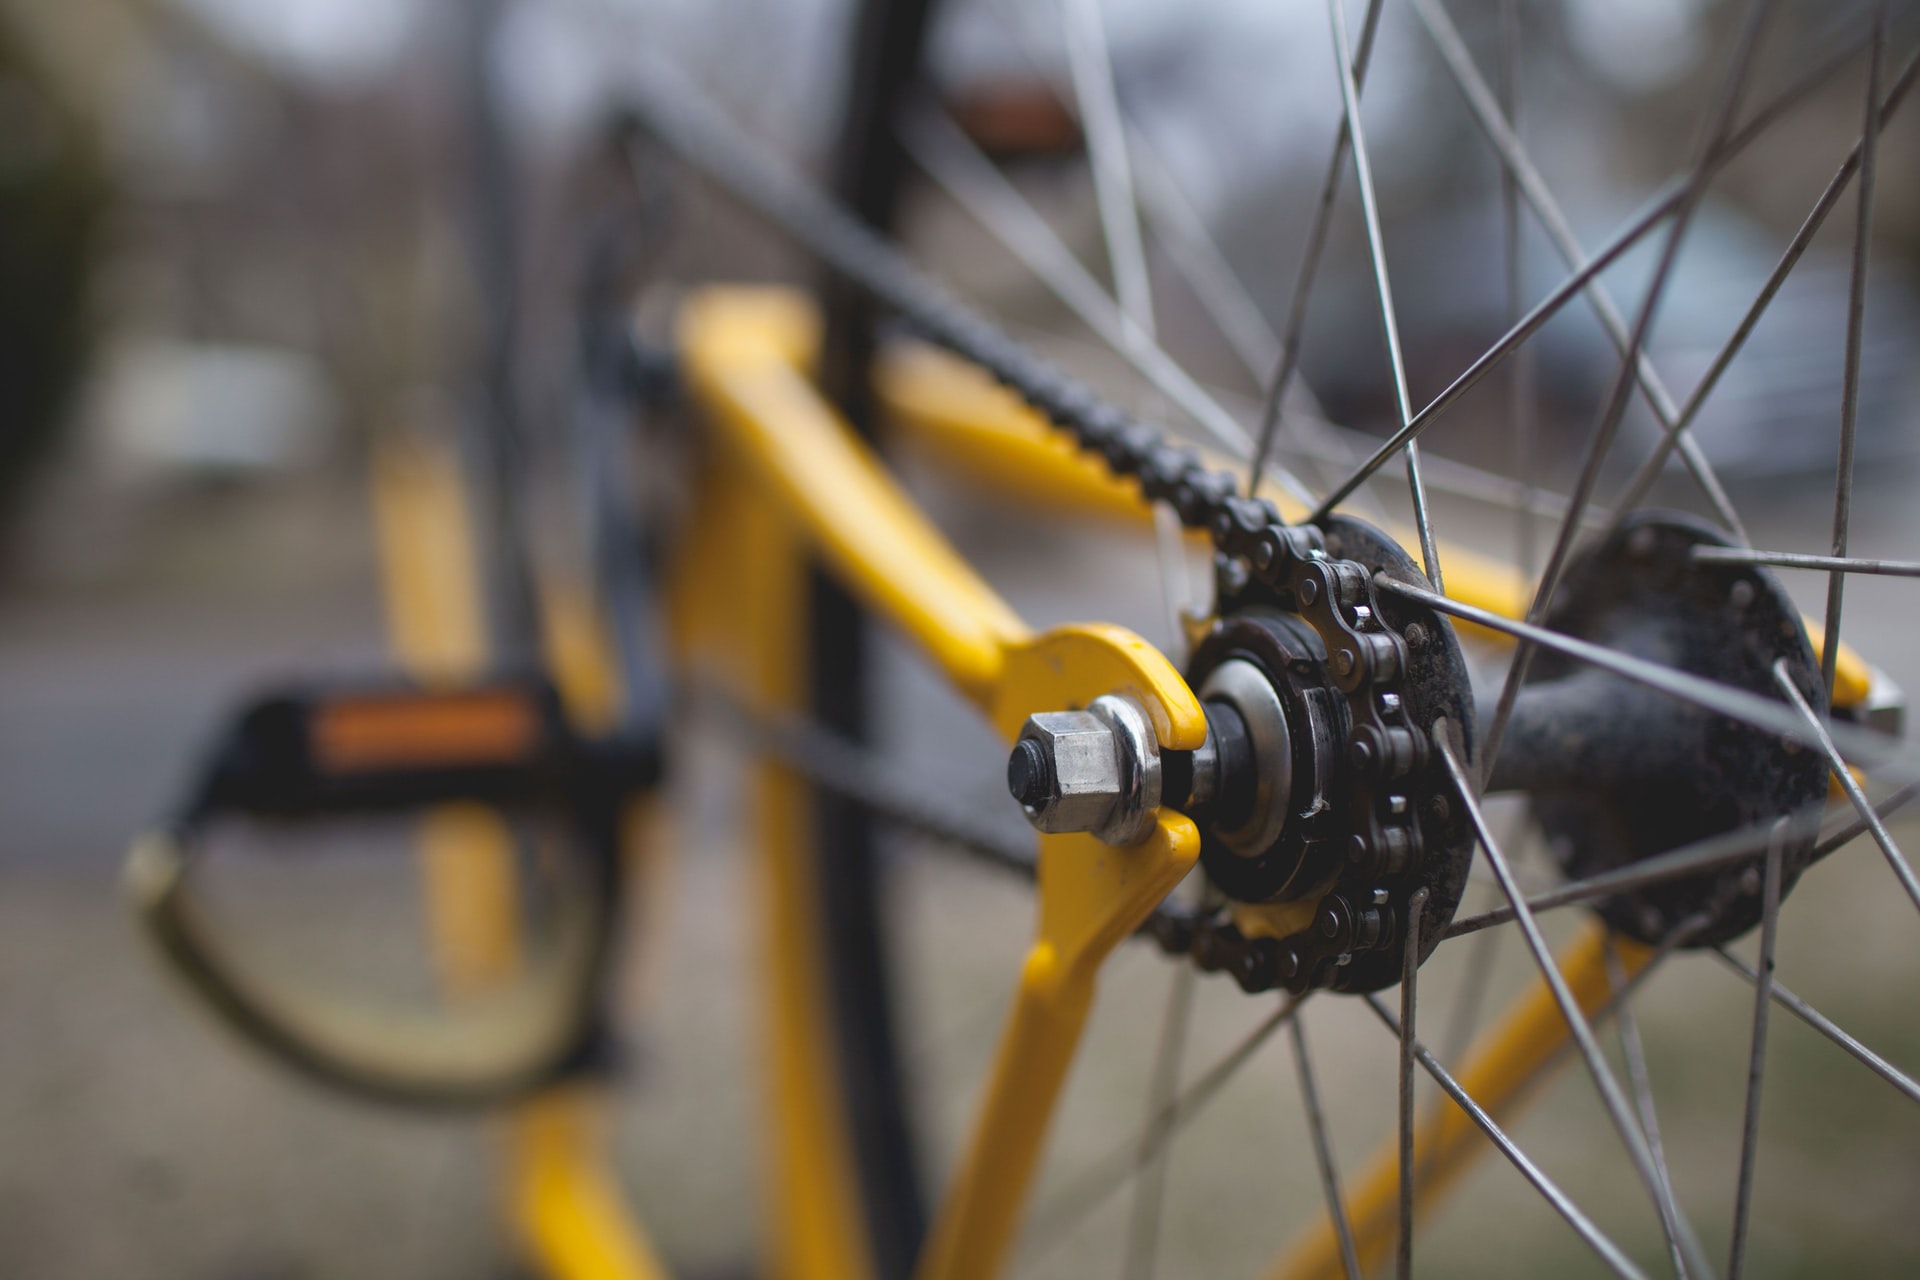 Home Bike Service. How to prepare your bike for the season?